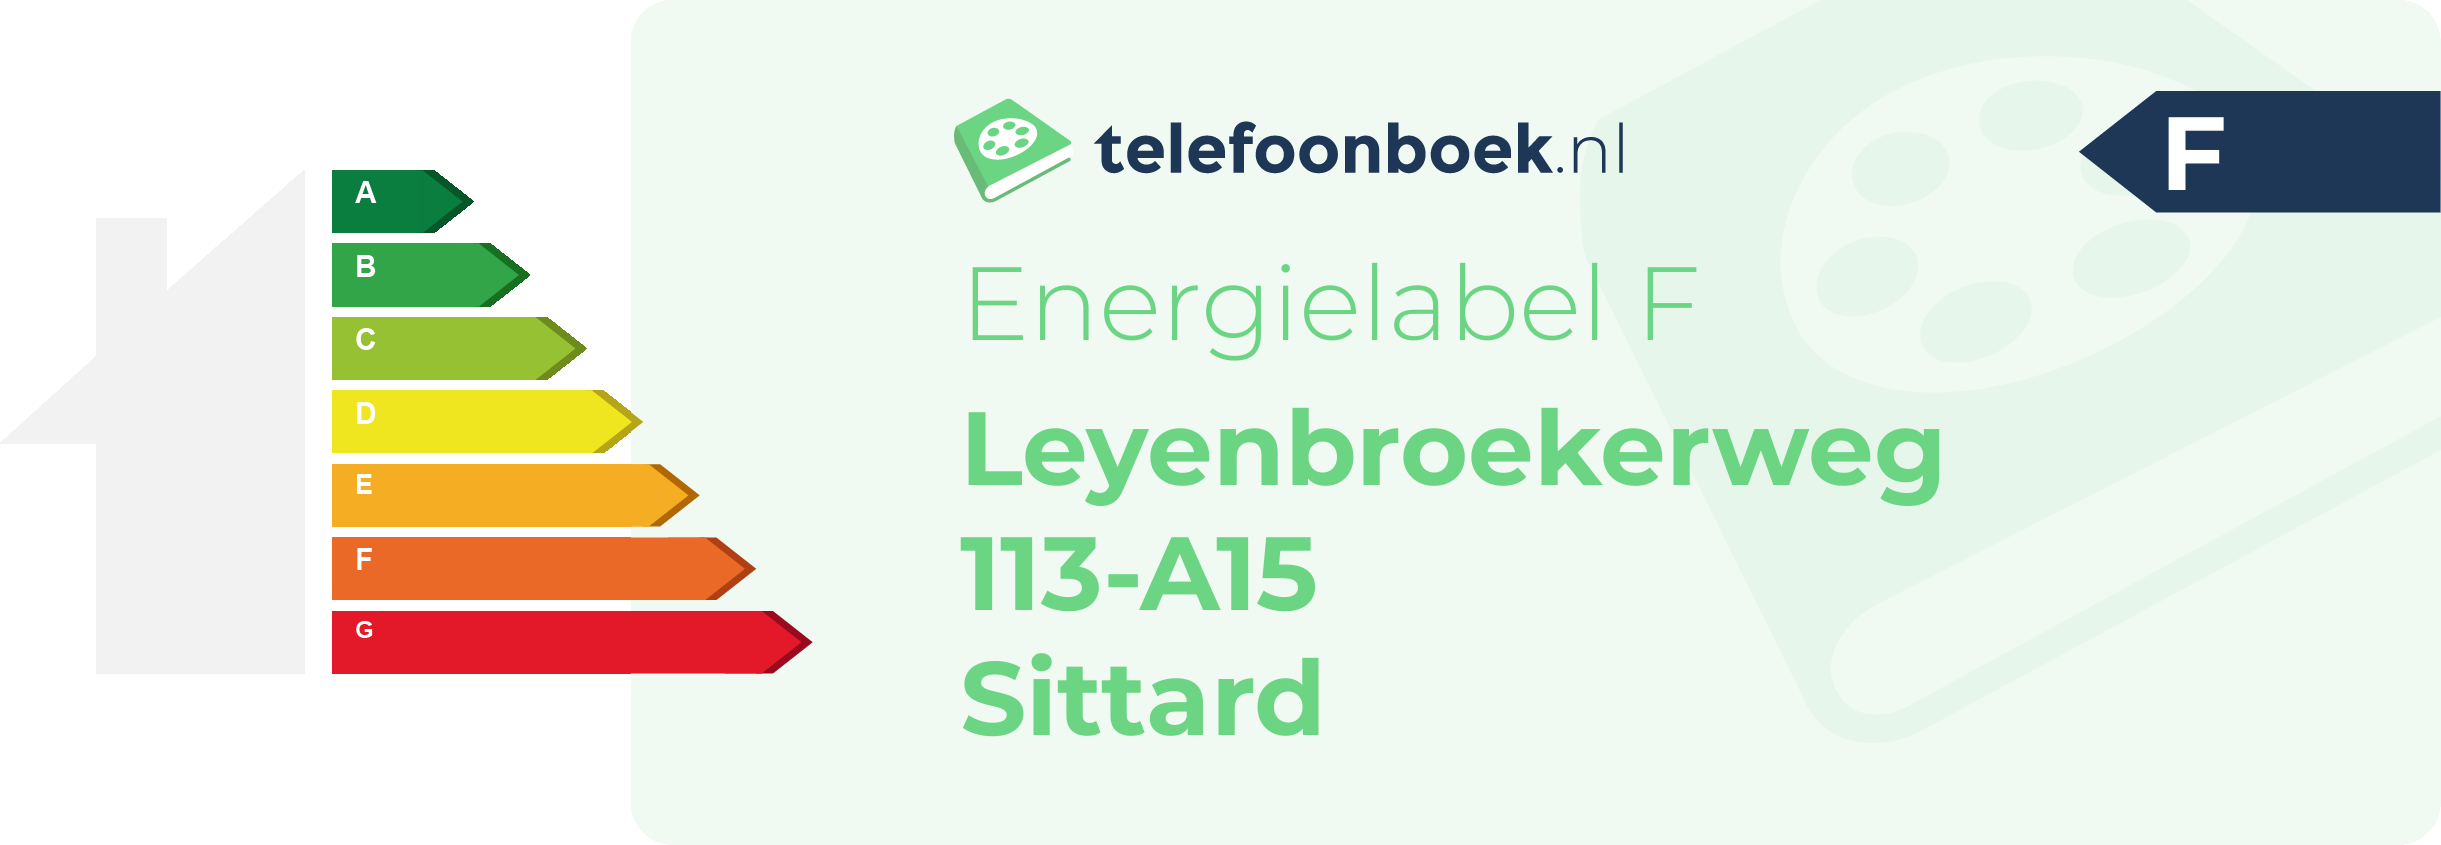 Energielabel Leyenbroekerweg 113-A15 Sittard